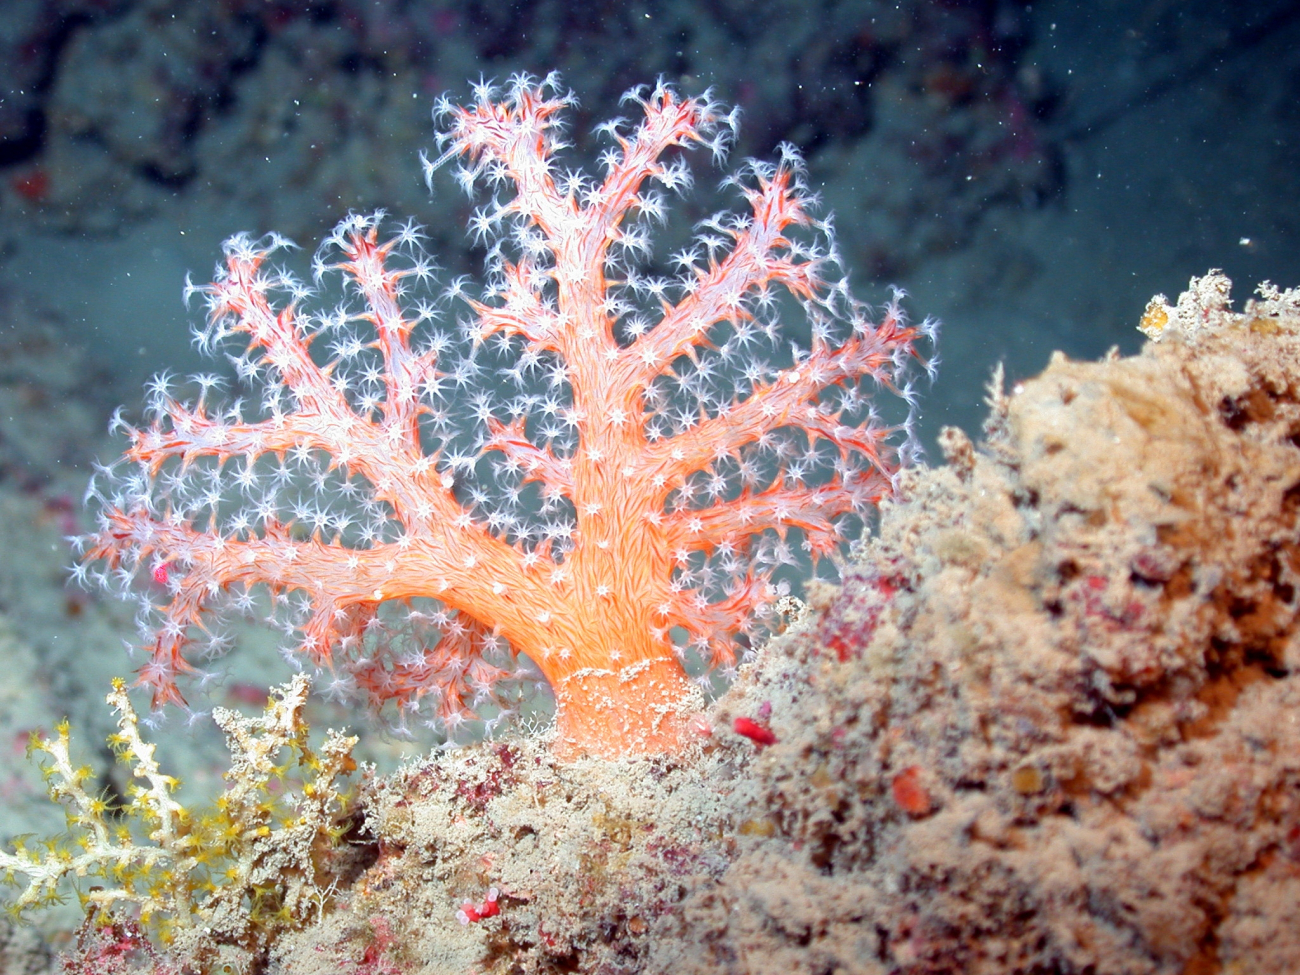 A beautiful orange soft coral with white polyps feeding